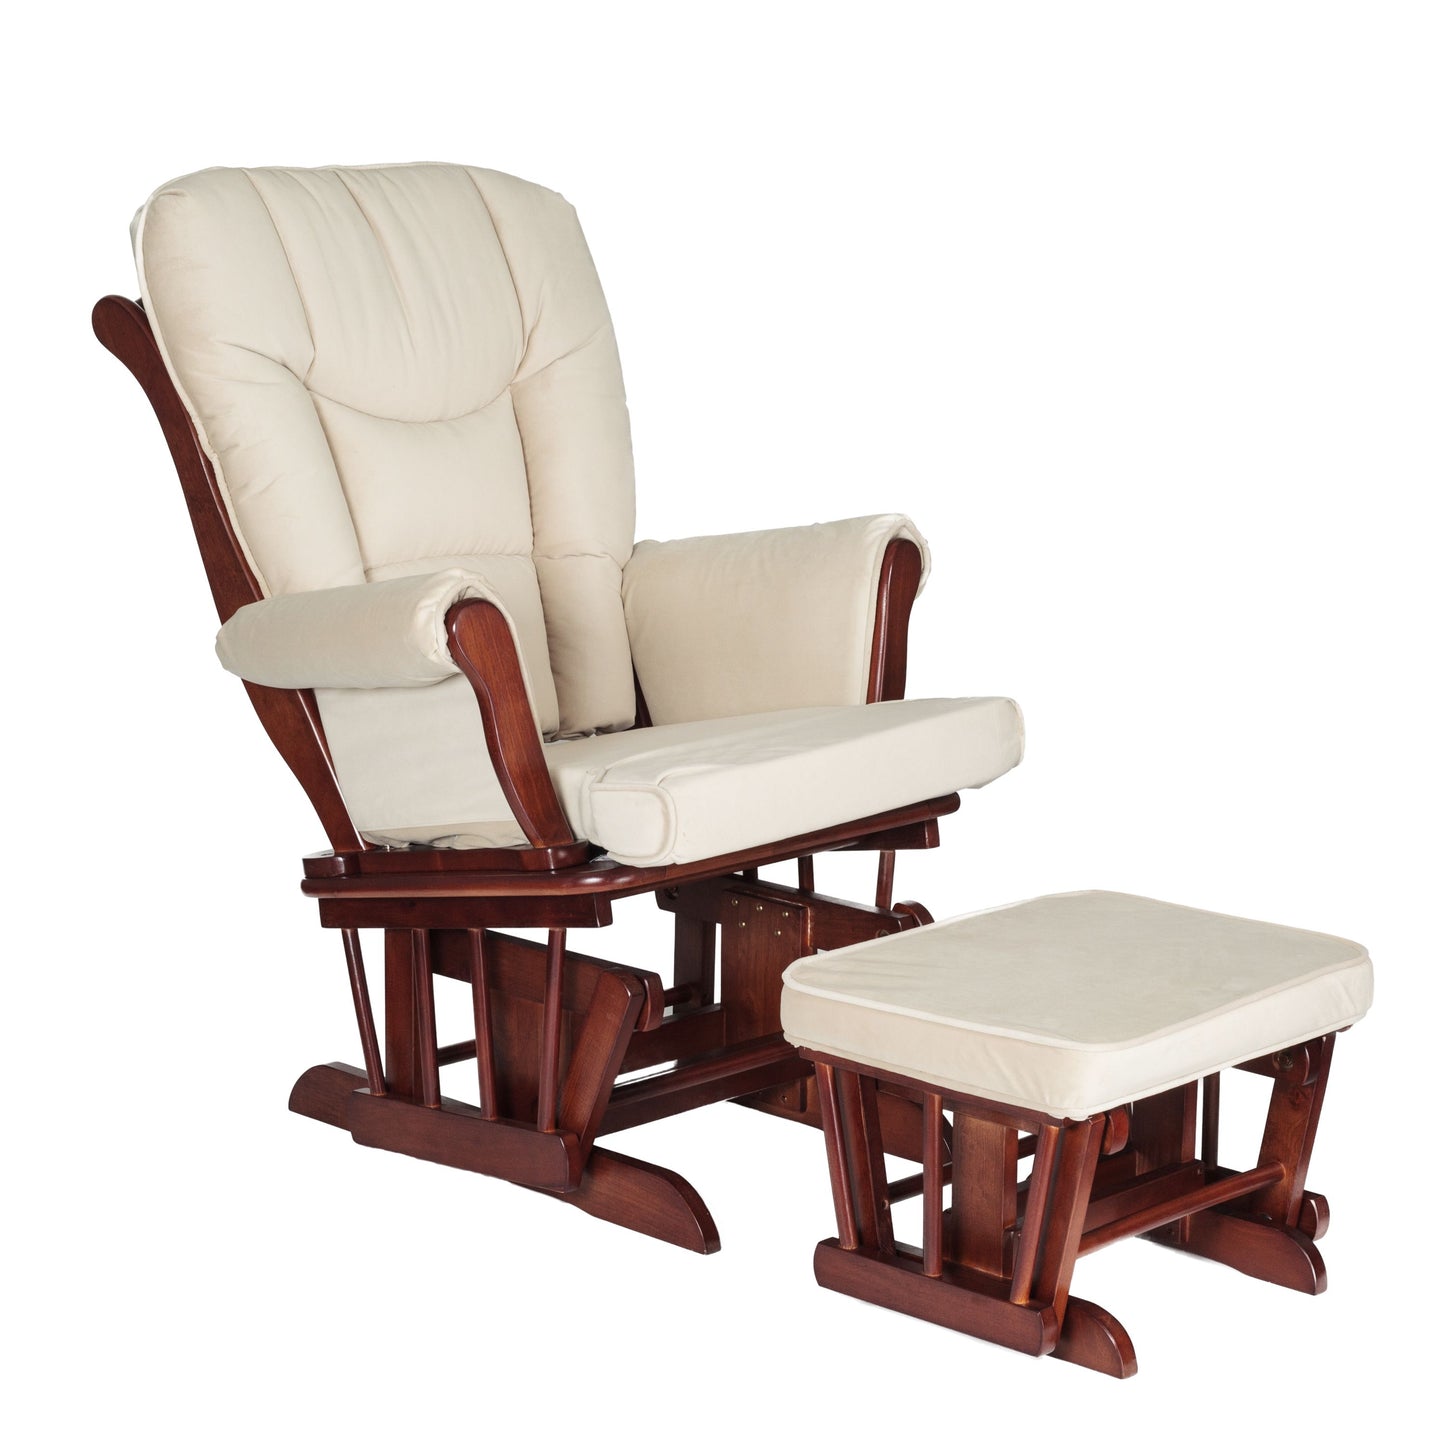 Sleigh Glider Nursing Chair and Ottoman